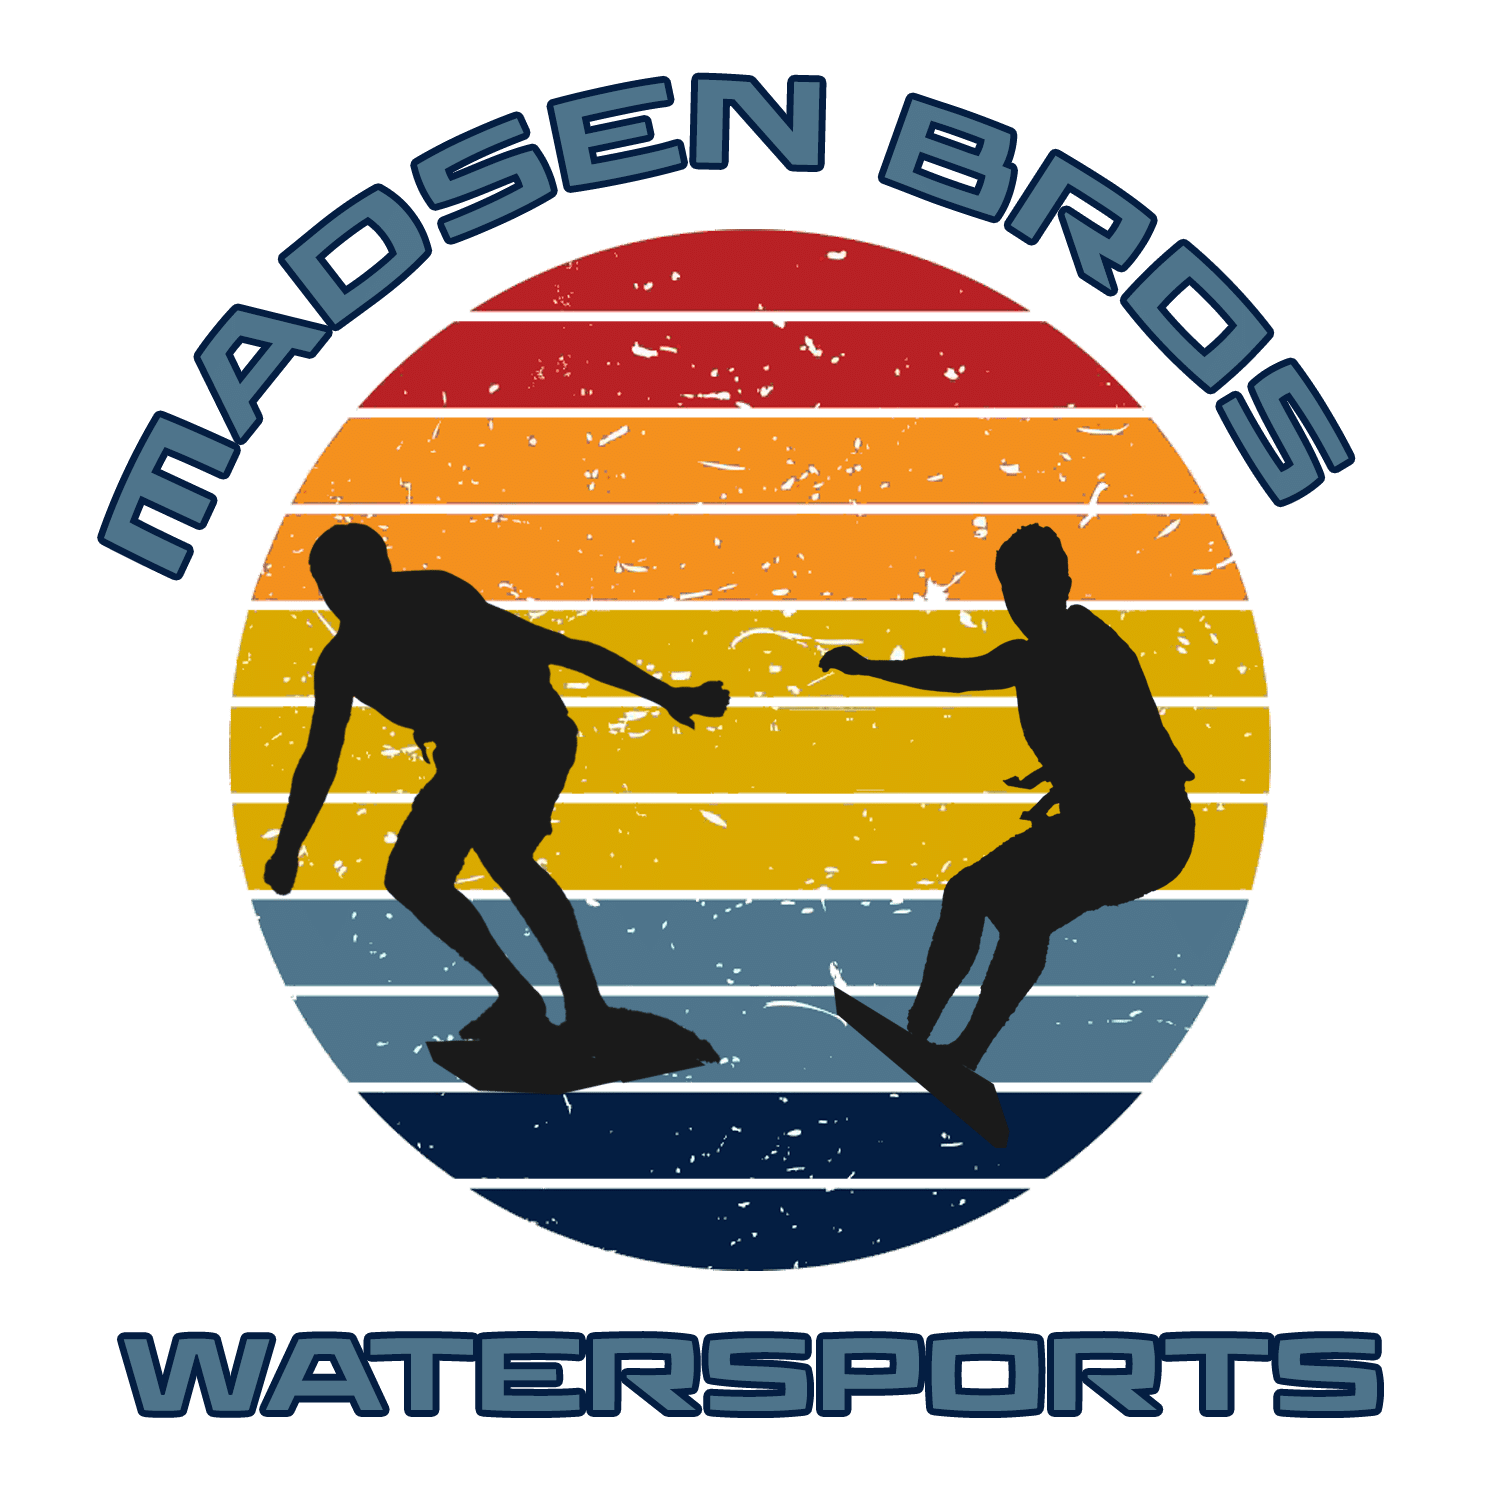 Madsen Bros Watersports